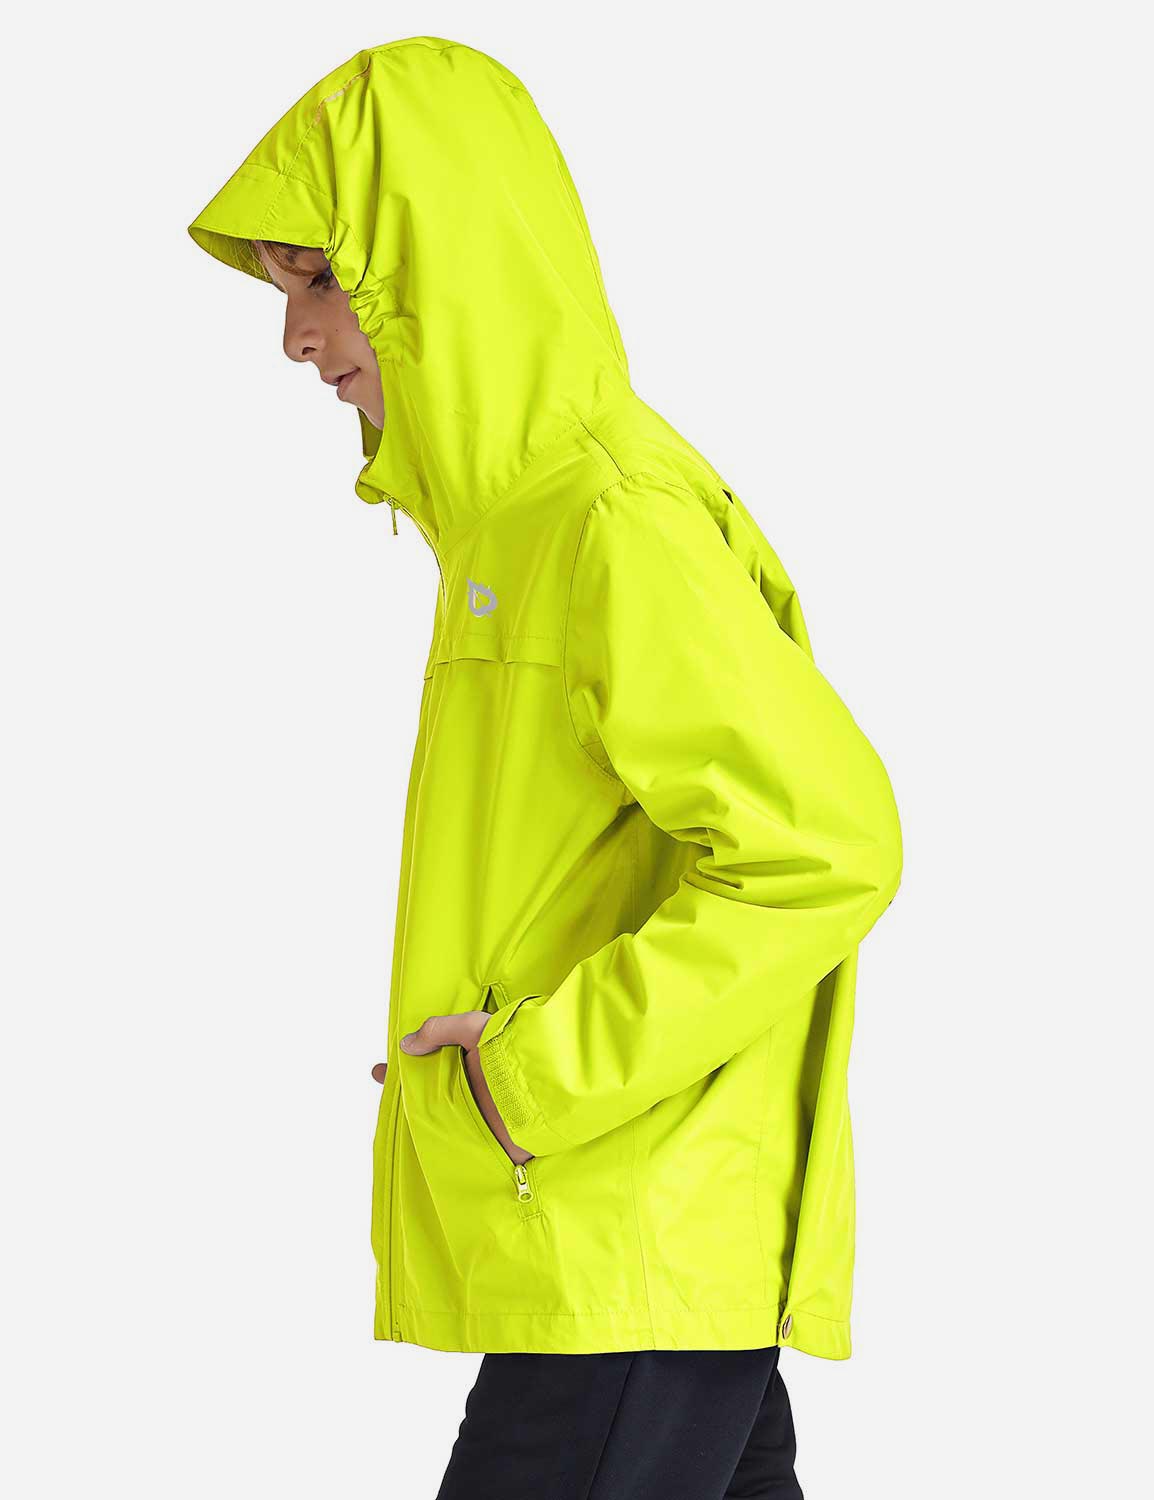 Baleaf Kid's Waterproof Outdoor Hooded Cycling Rain Jacket cai037 Yellow Side